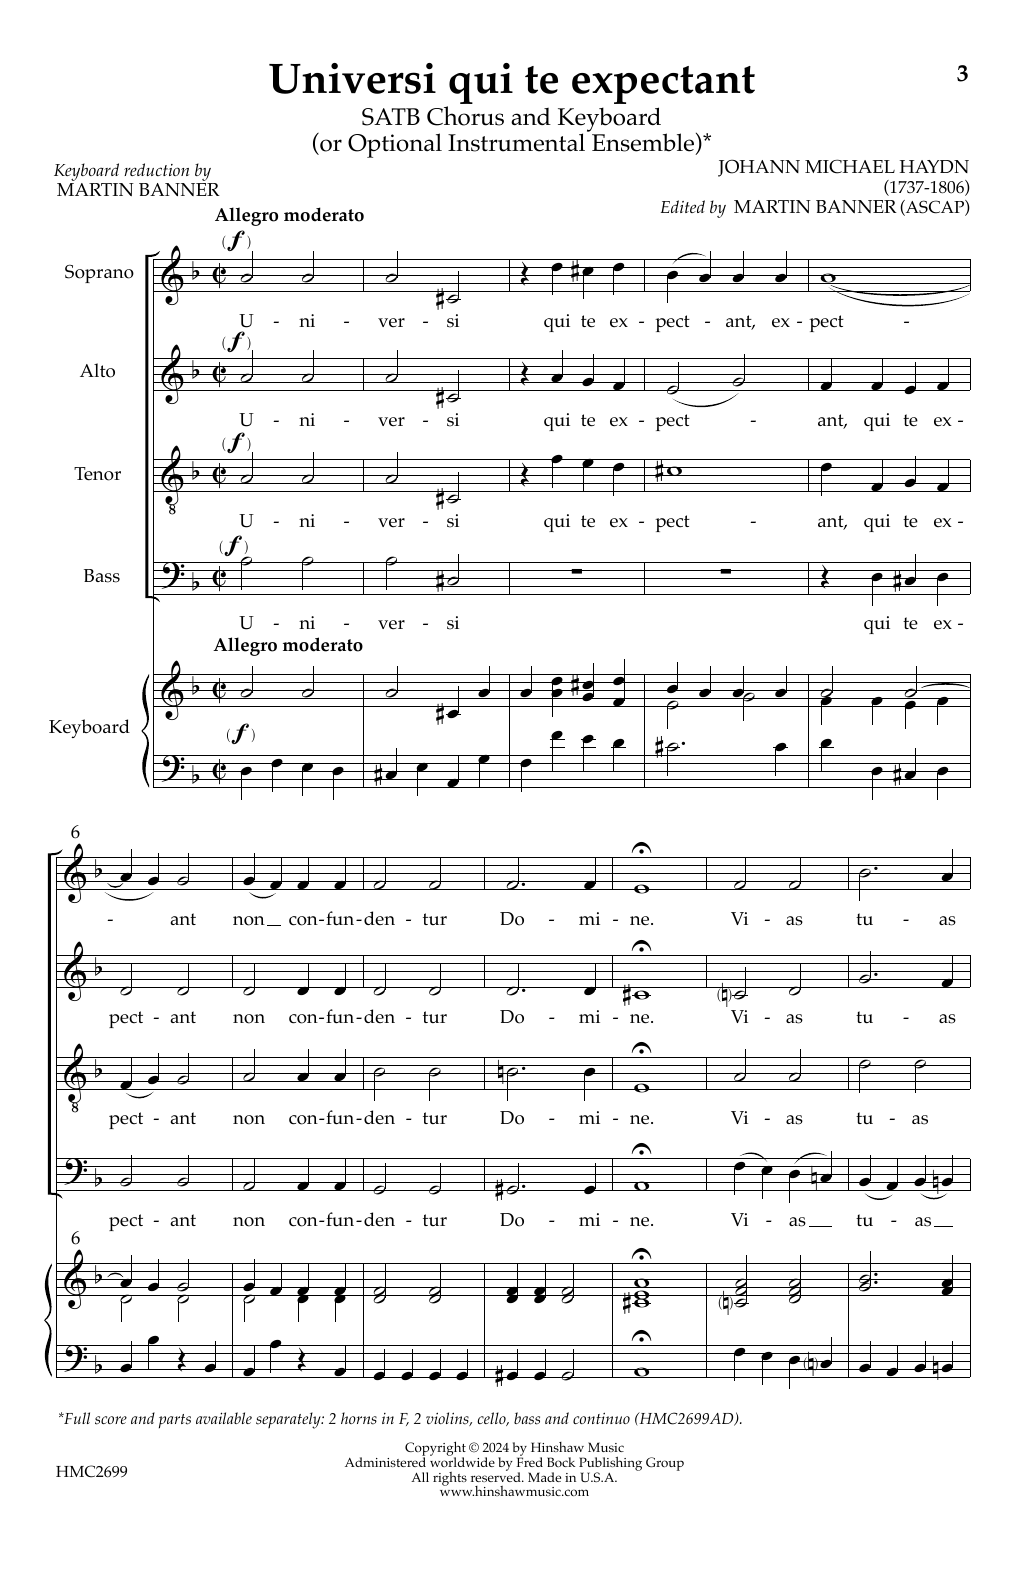 Johann Michael Hayden Universi Qui Te Expectant Sheet Music Notes & Chords for SATB Choir - Download or Print PDF